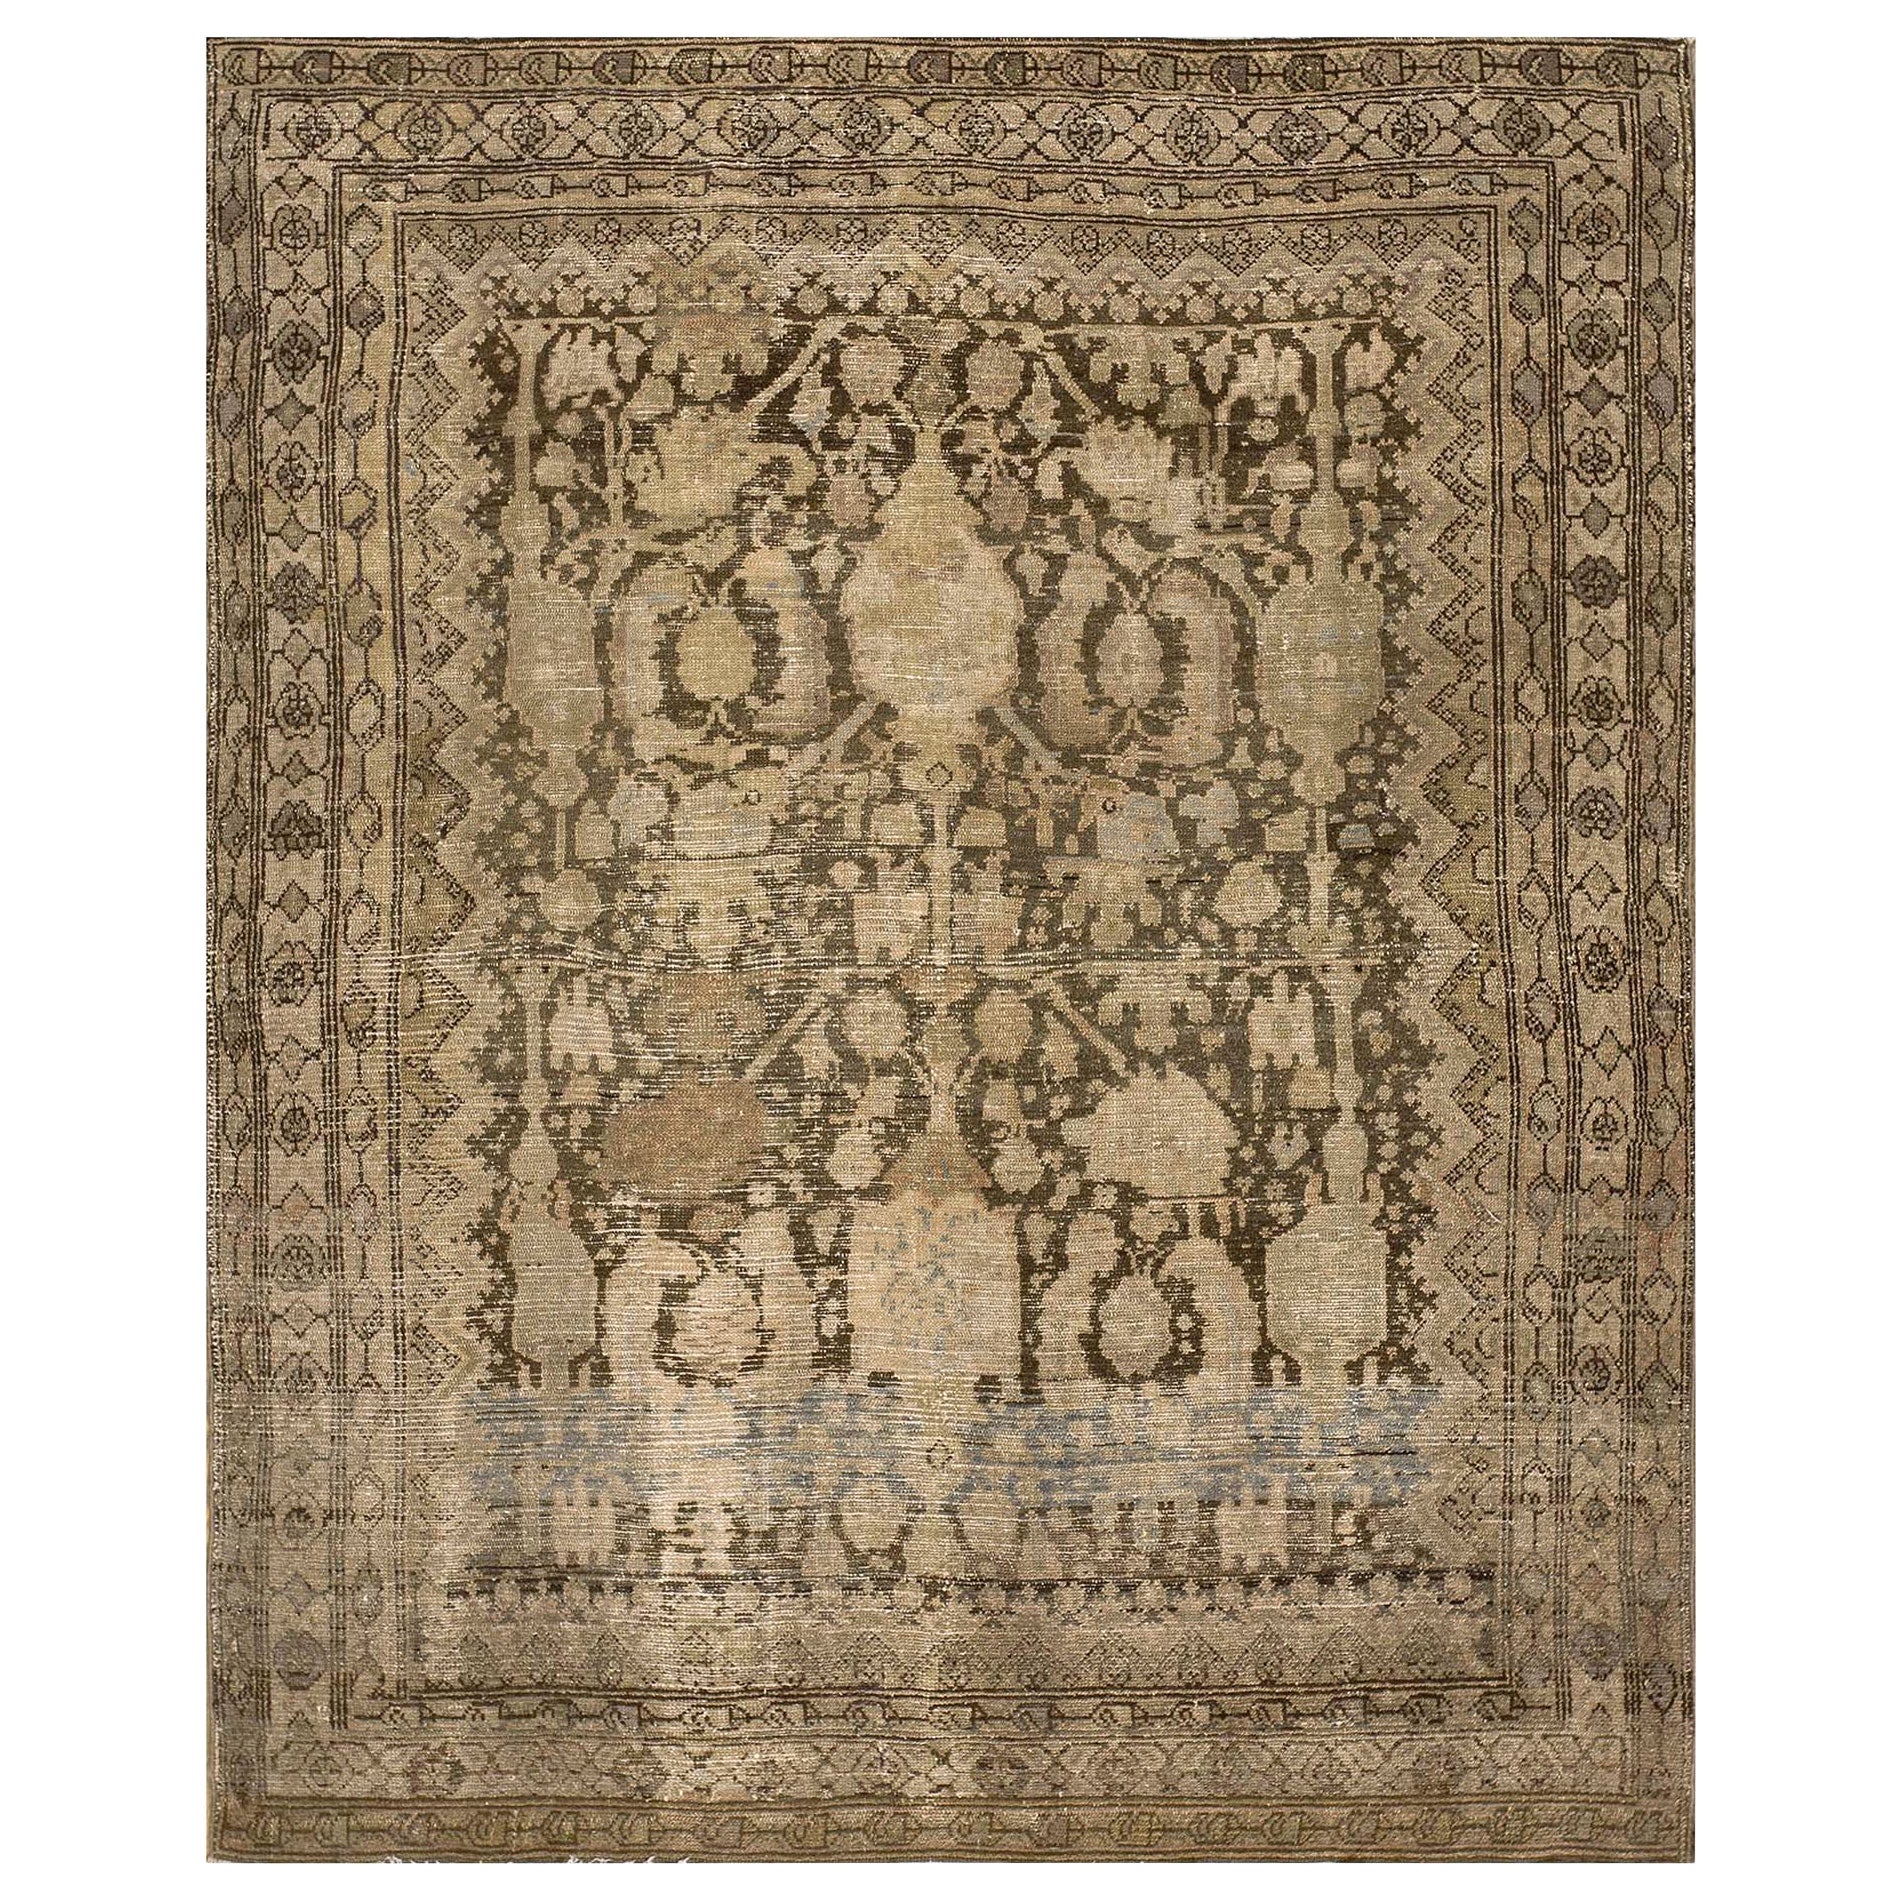 Early 20th Century Persian Malayer Carpet ( 5'1" x 6'1" - 155 x 85 cm ) 